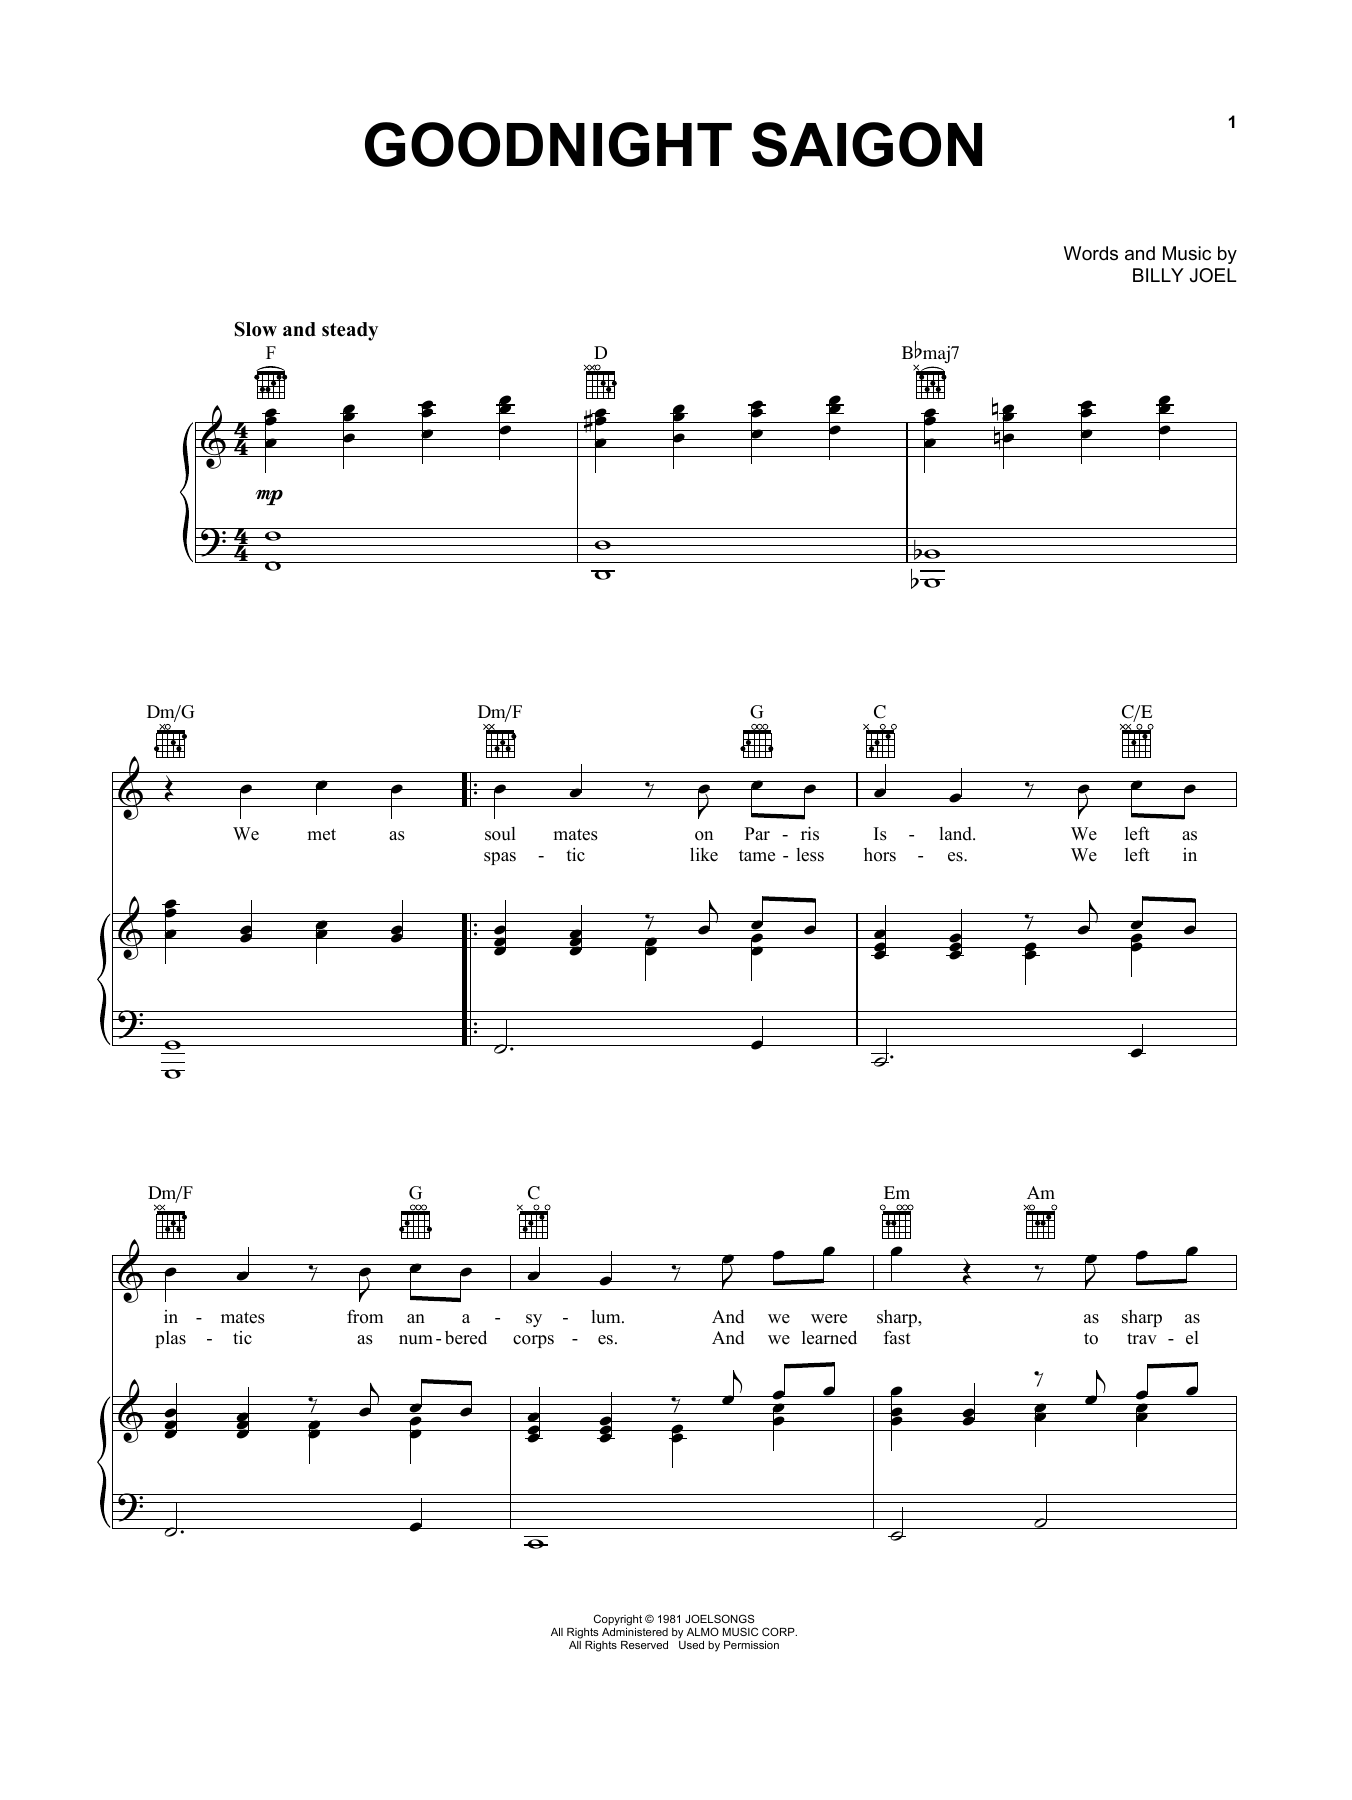 Billy Joel Goodnight Saigon Sheet Music Notes & Chords for Lyrics & Piano Chords - Download or Print PDF